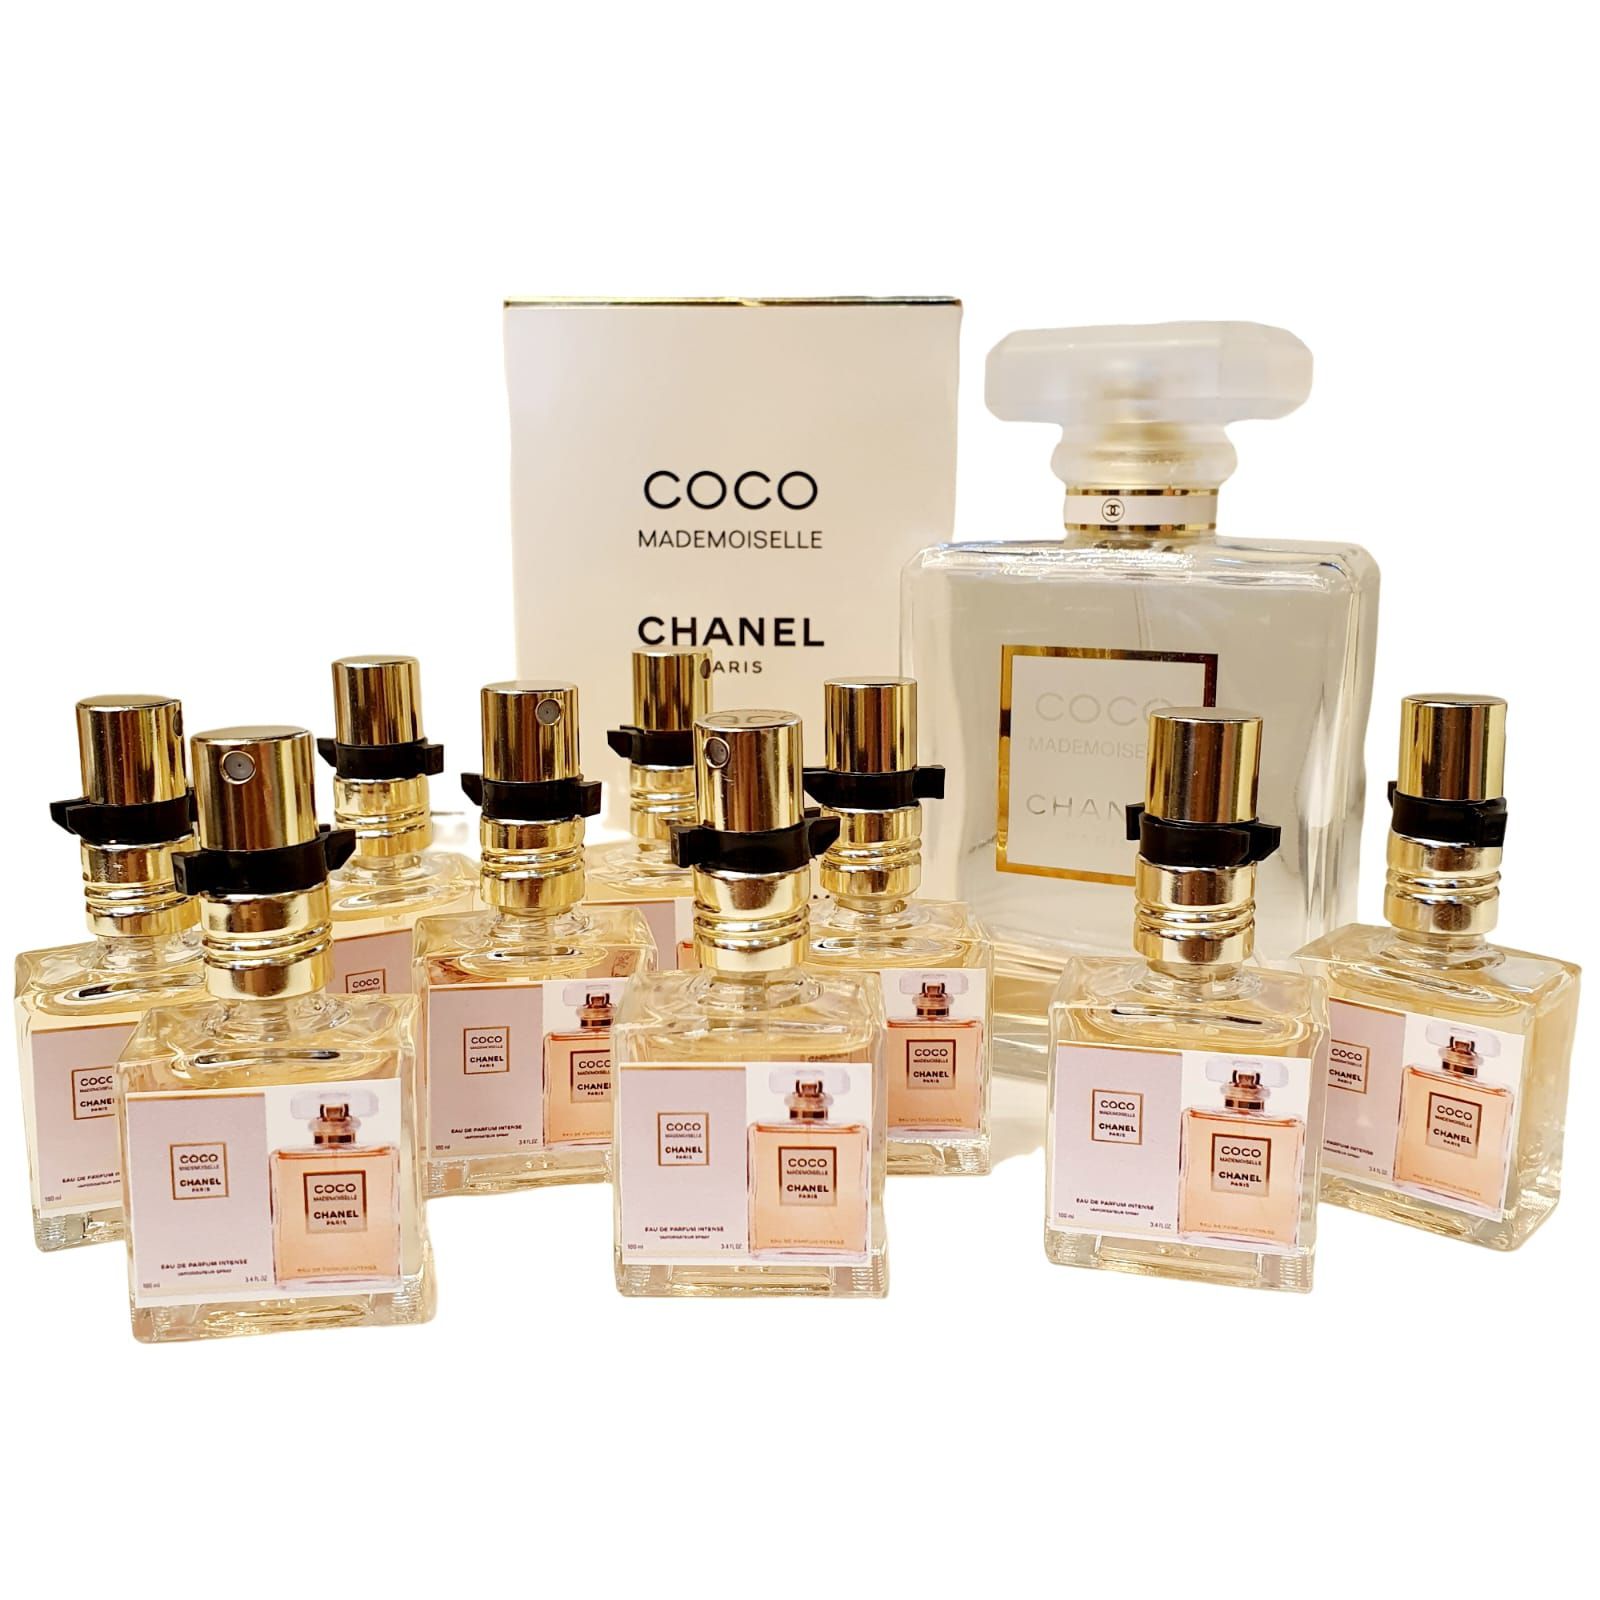 Mulheres Perfume Chanel Edp Coco Mademoiselle - Chanel